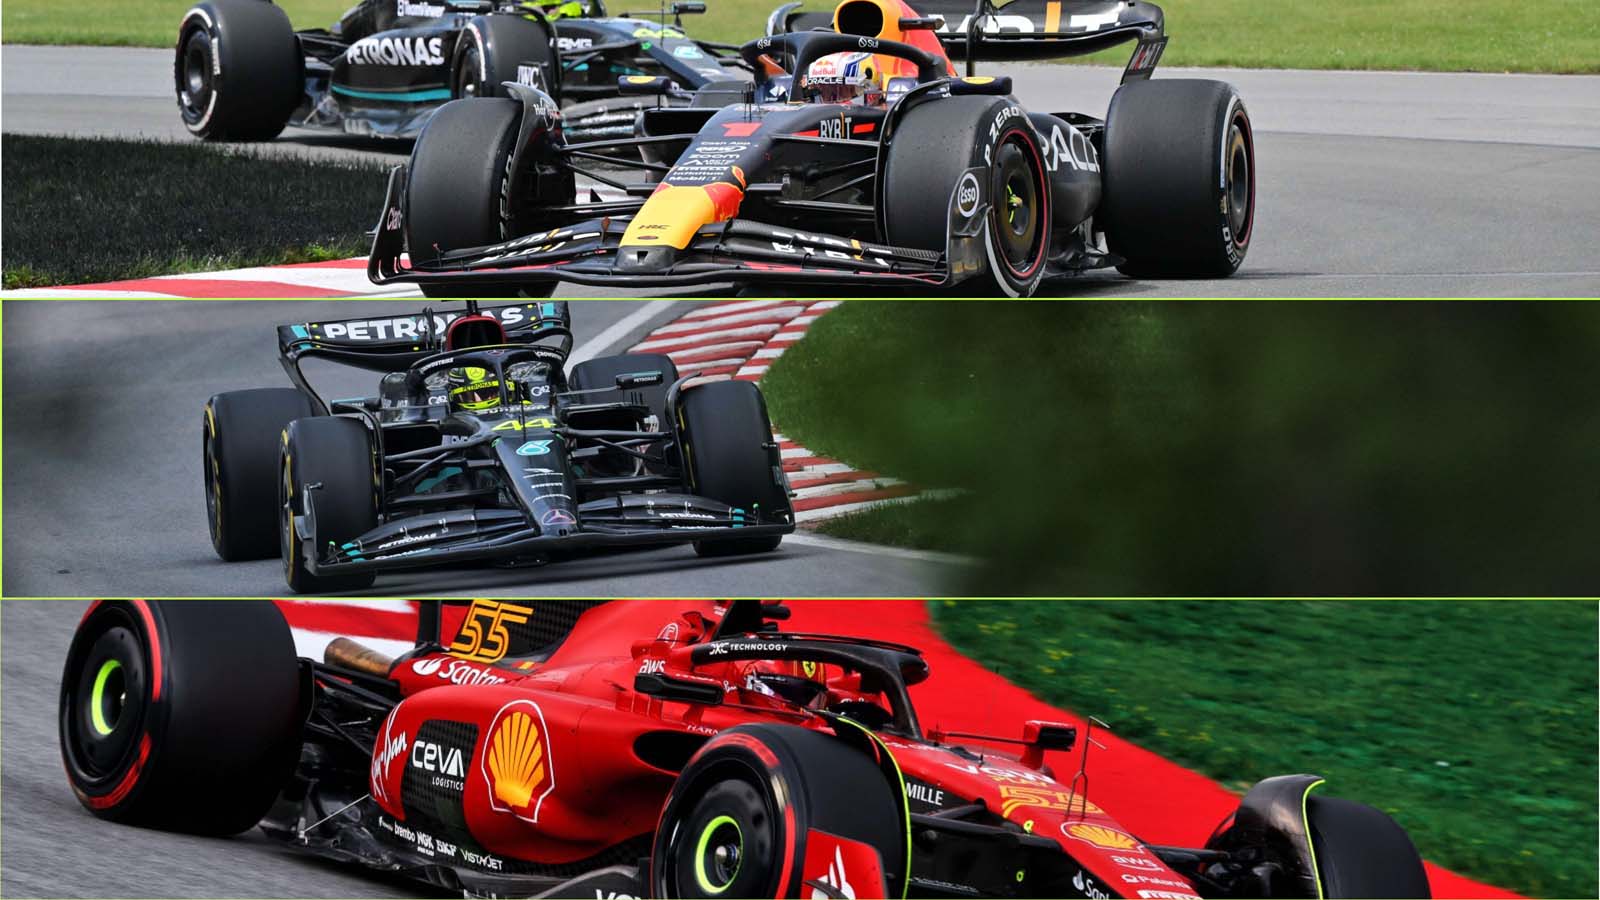 F1 most valuable team split screen. Ferrari